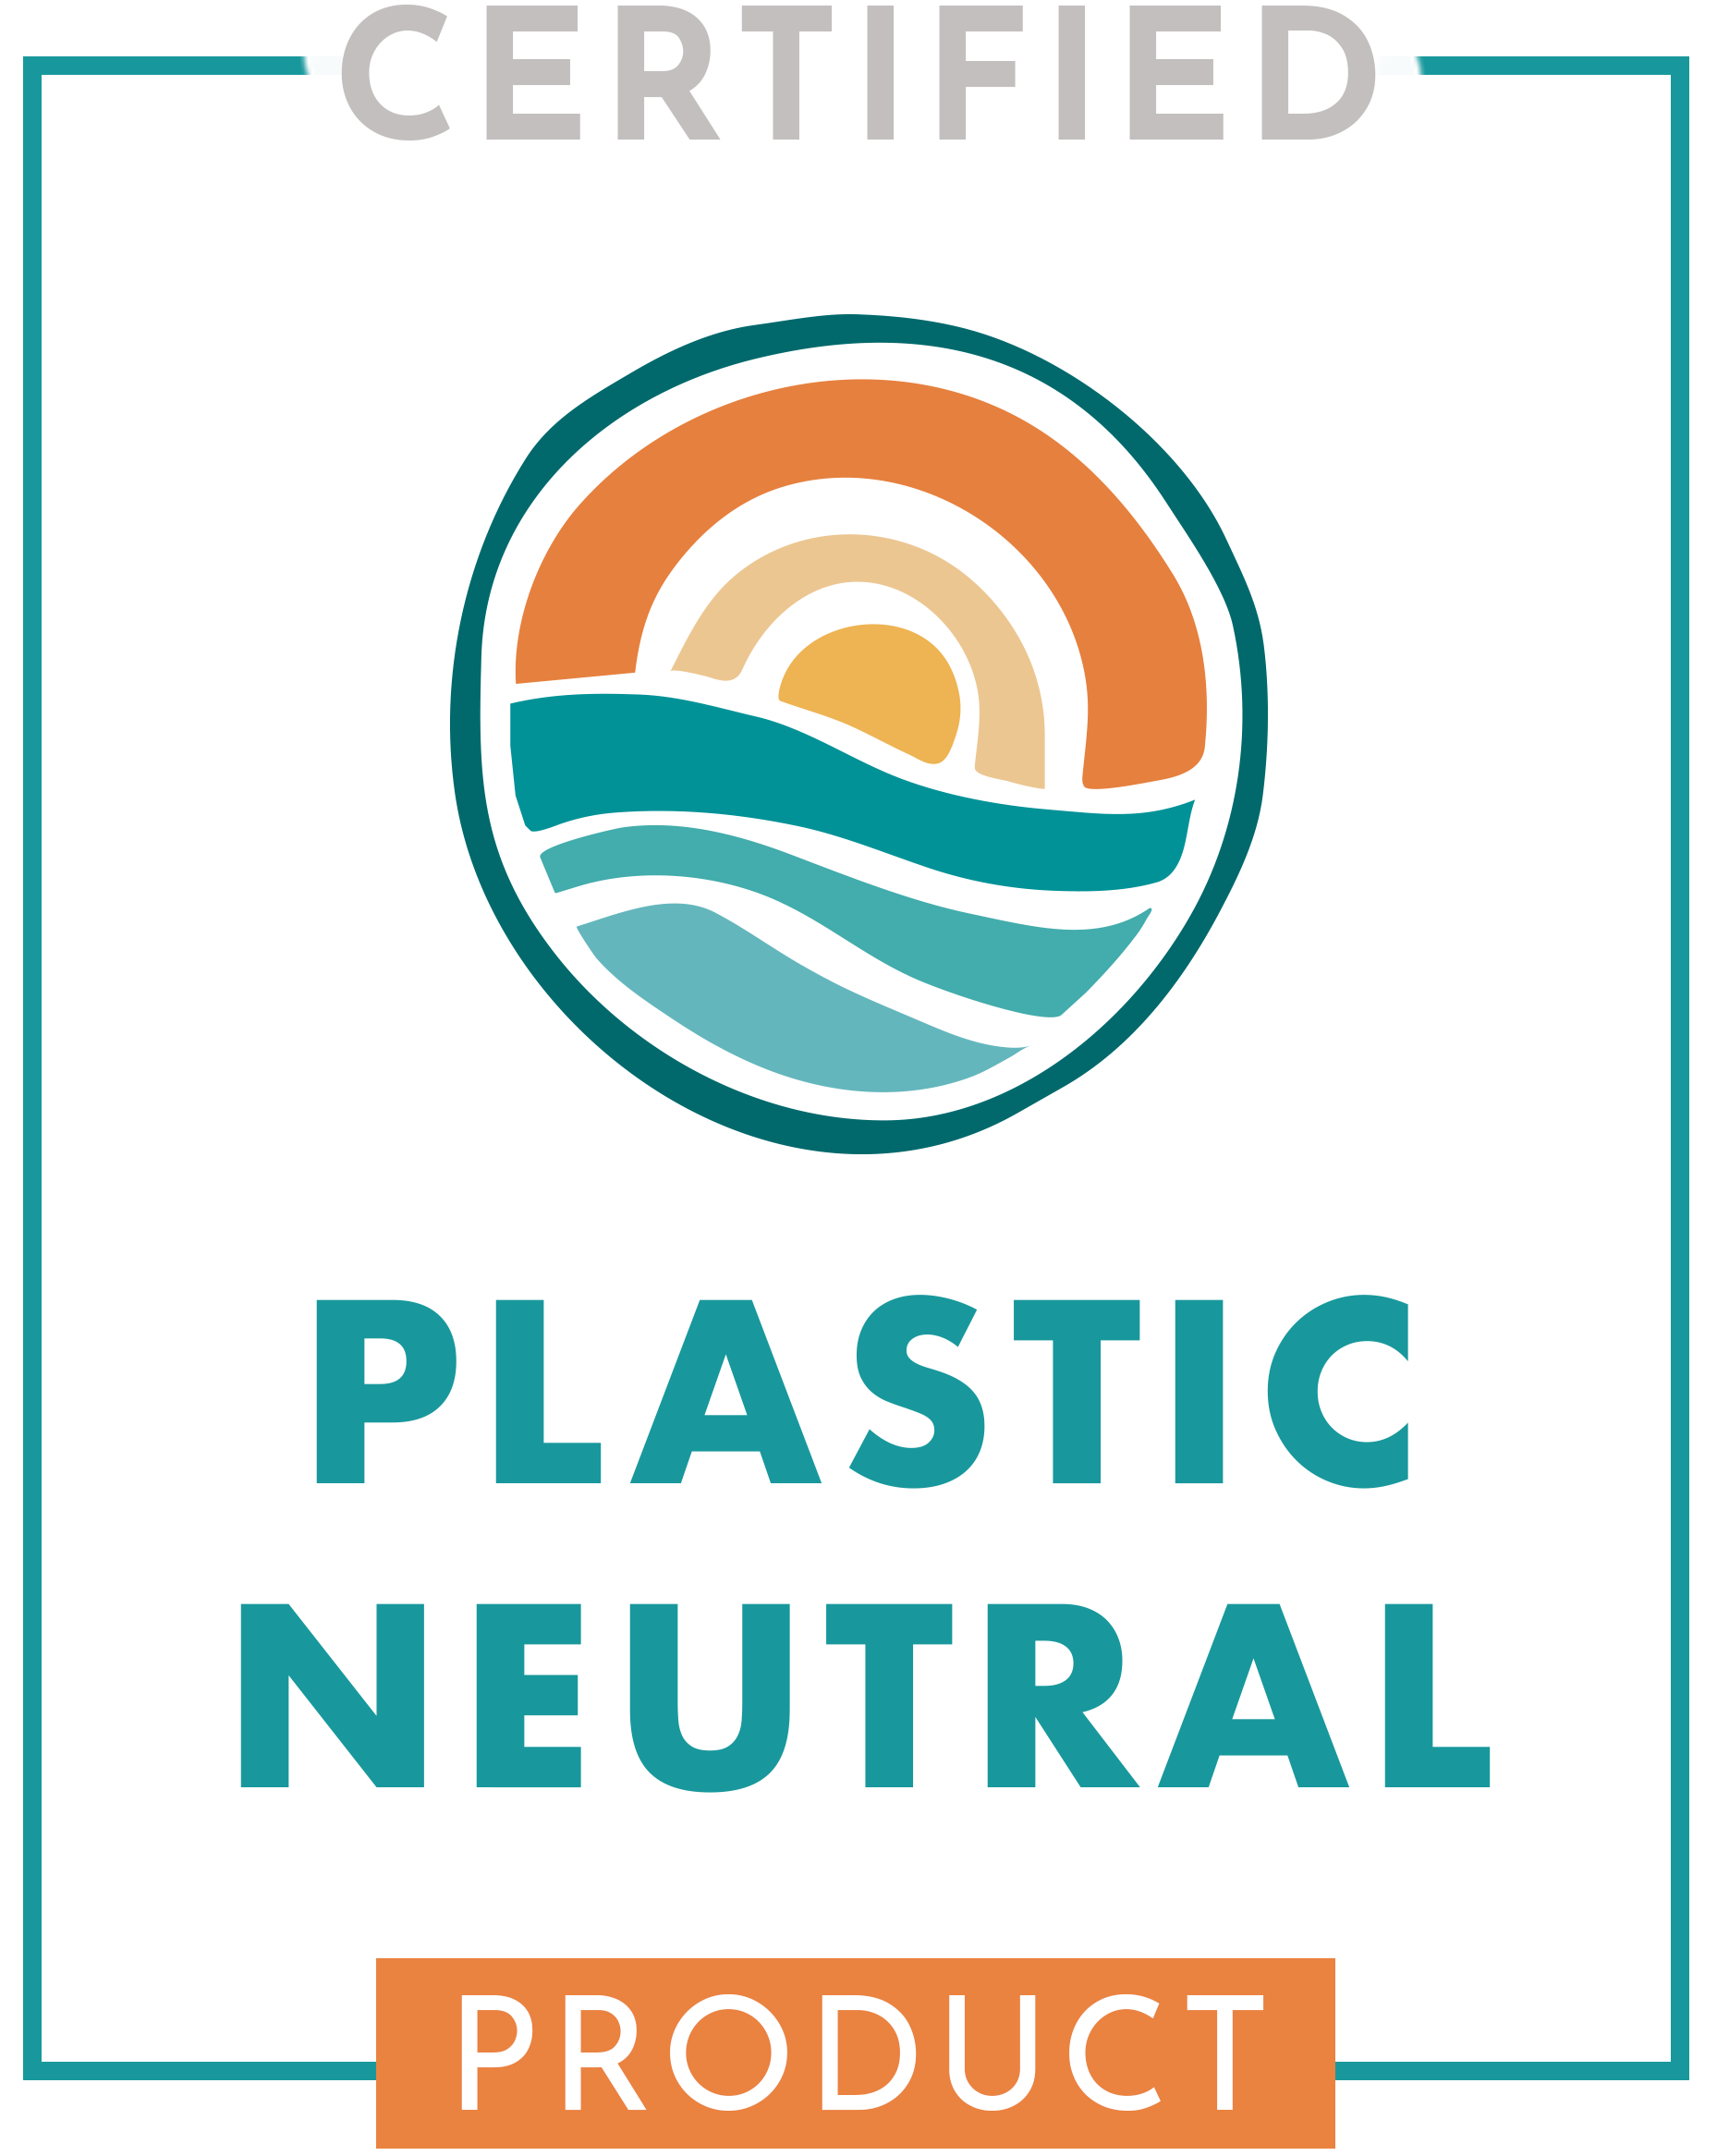 Plastic Neutral Certified